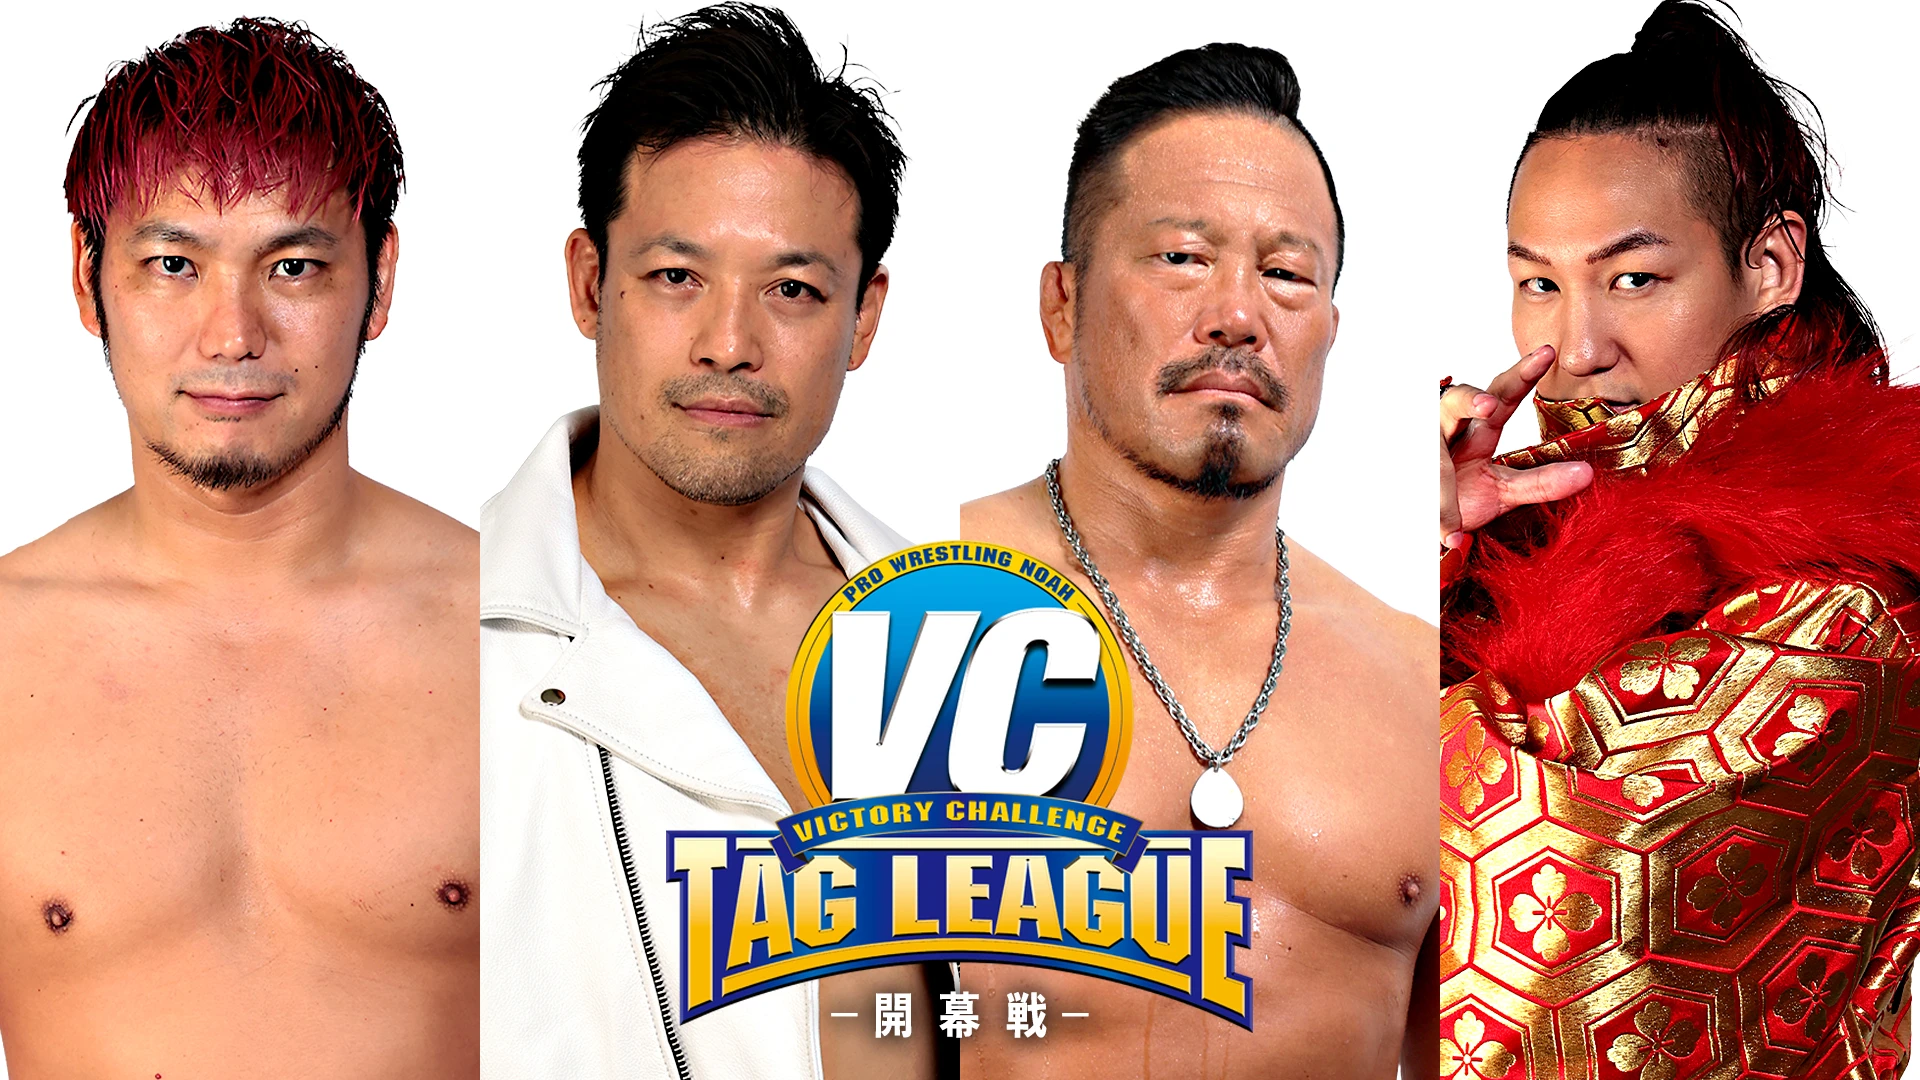 【Victory Challenge Tag League開幕戦】 2.24横浜ラジアントホール大会 一部対戦カード決定のお知らせ